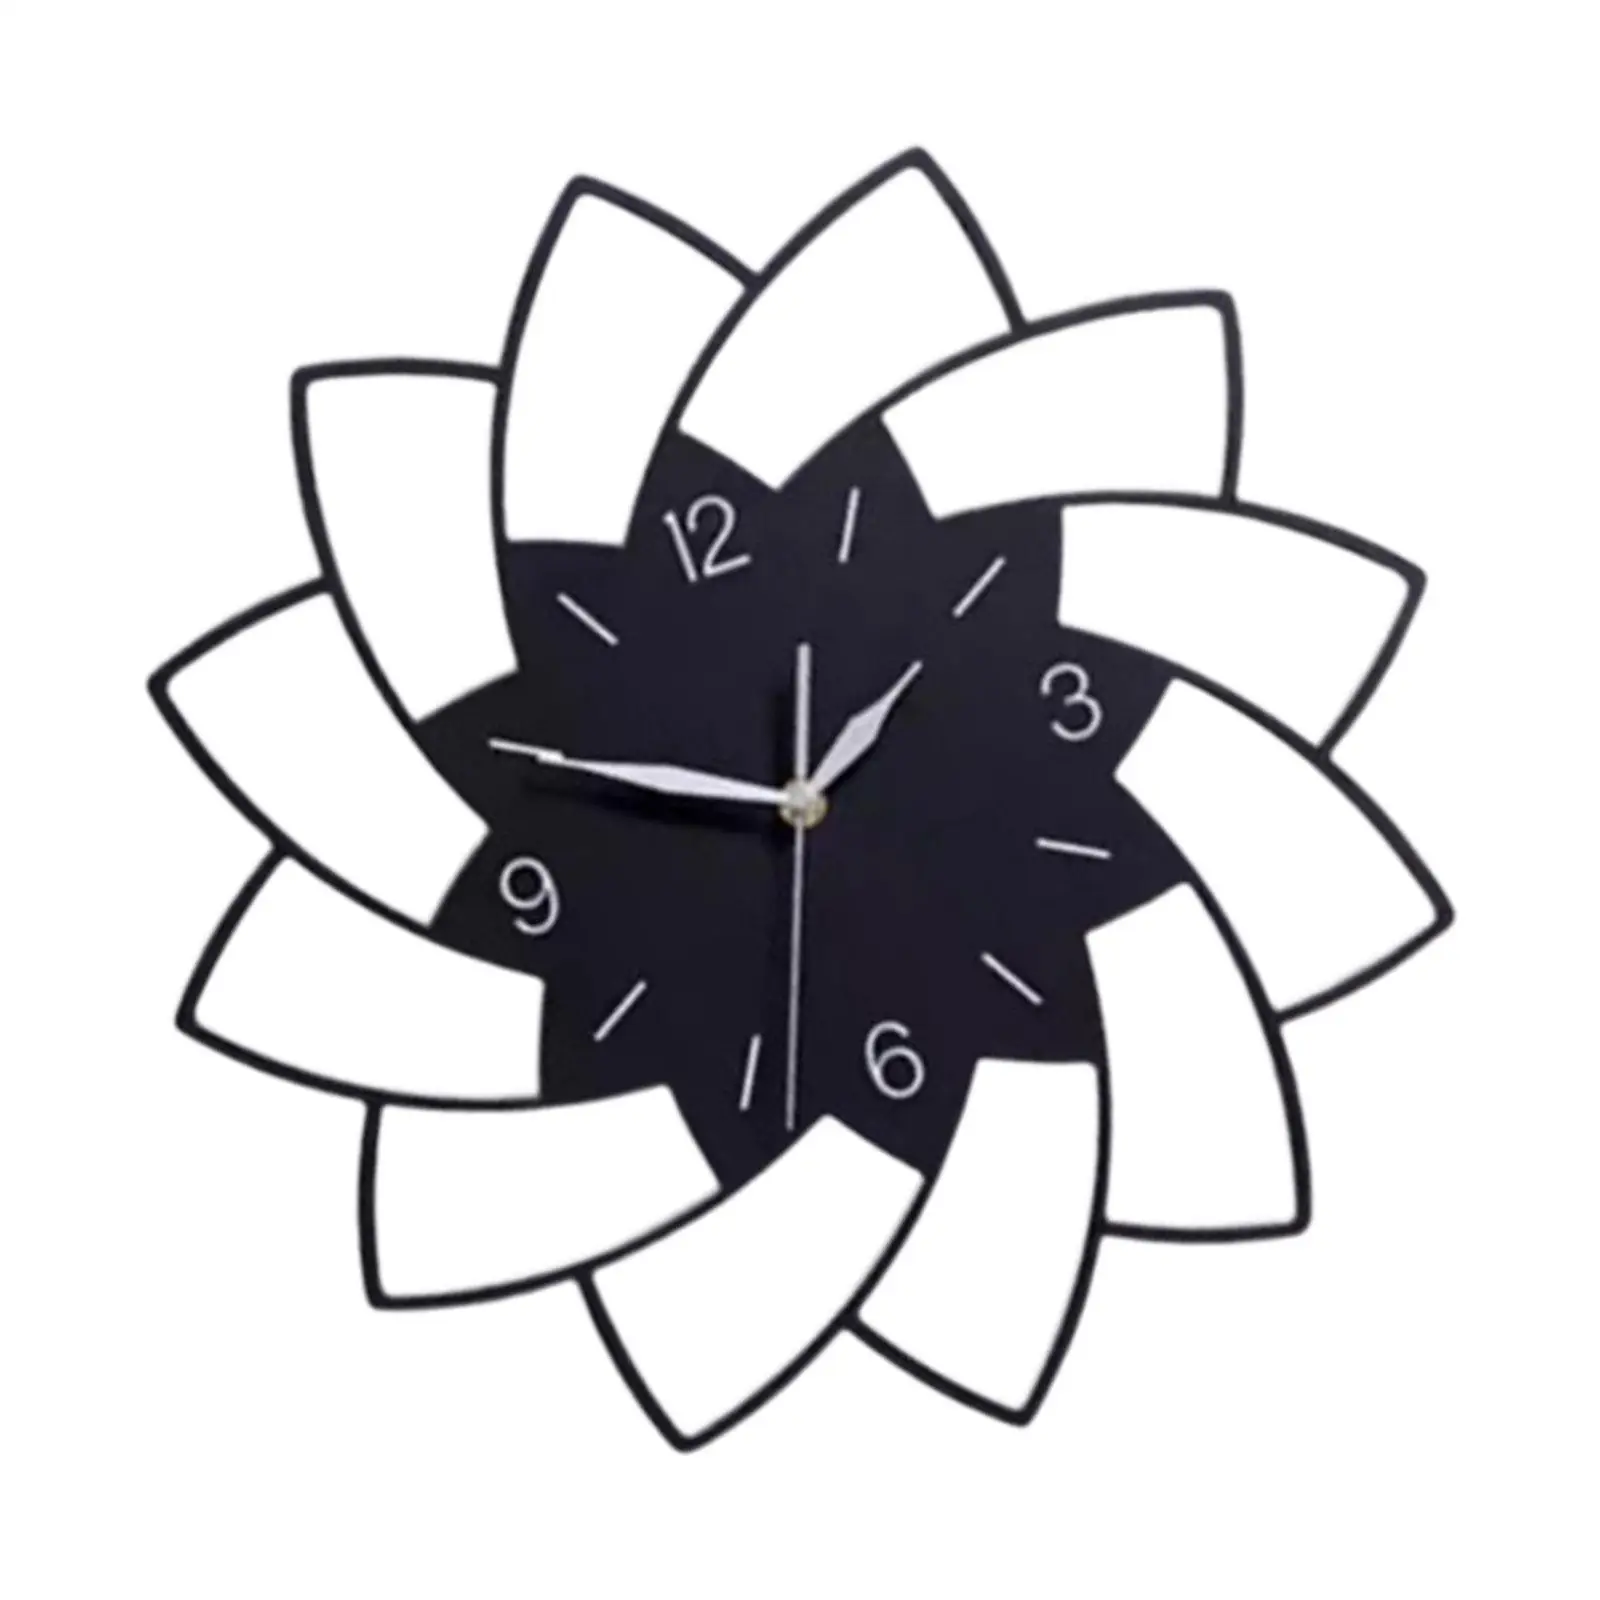 Acrylic Wall Clock Decorative Clocks Modern Silent Flower Shaped Hanging Clock